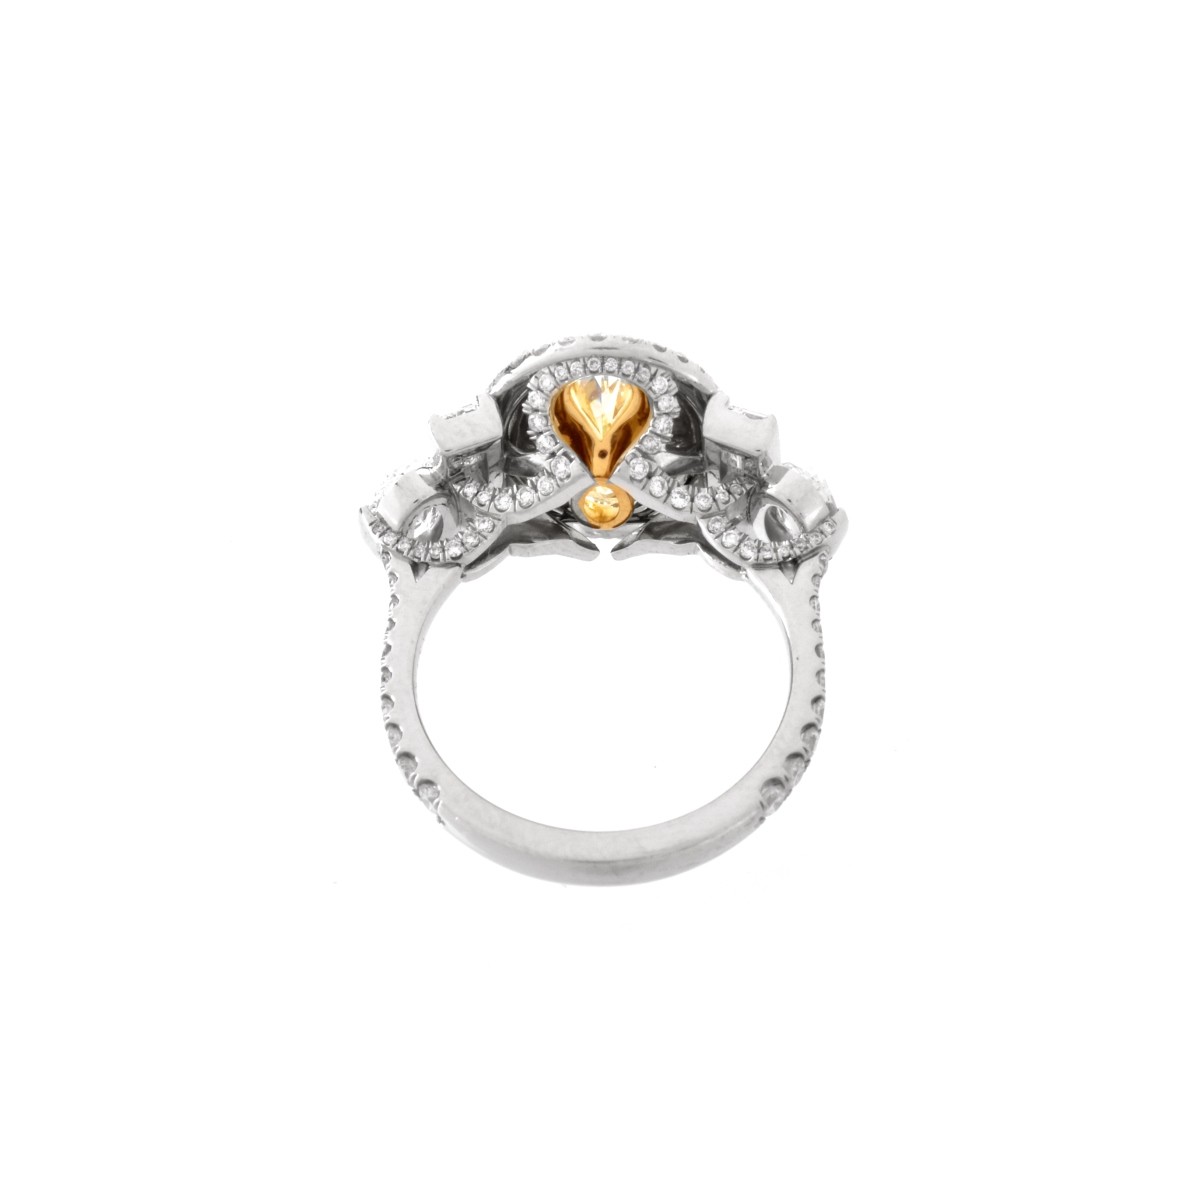 Fancy Yellow Diamond and Platinum Ring